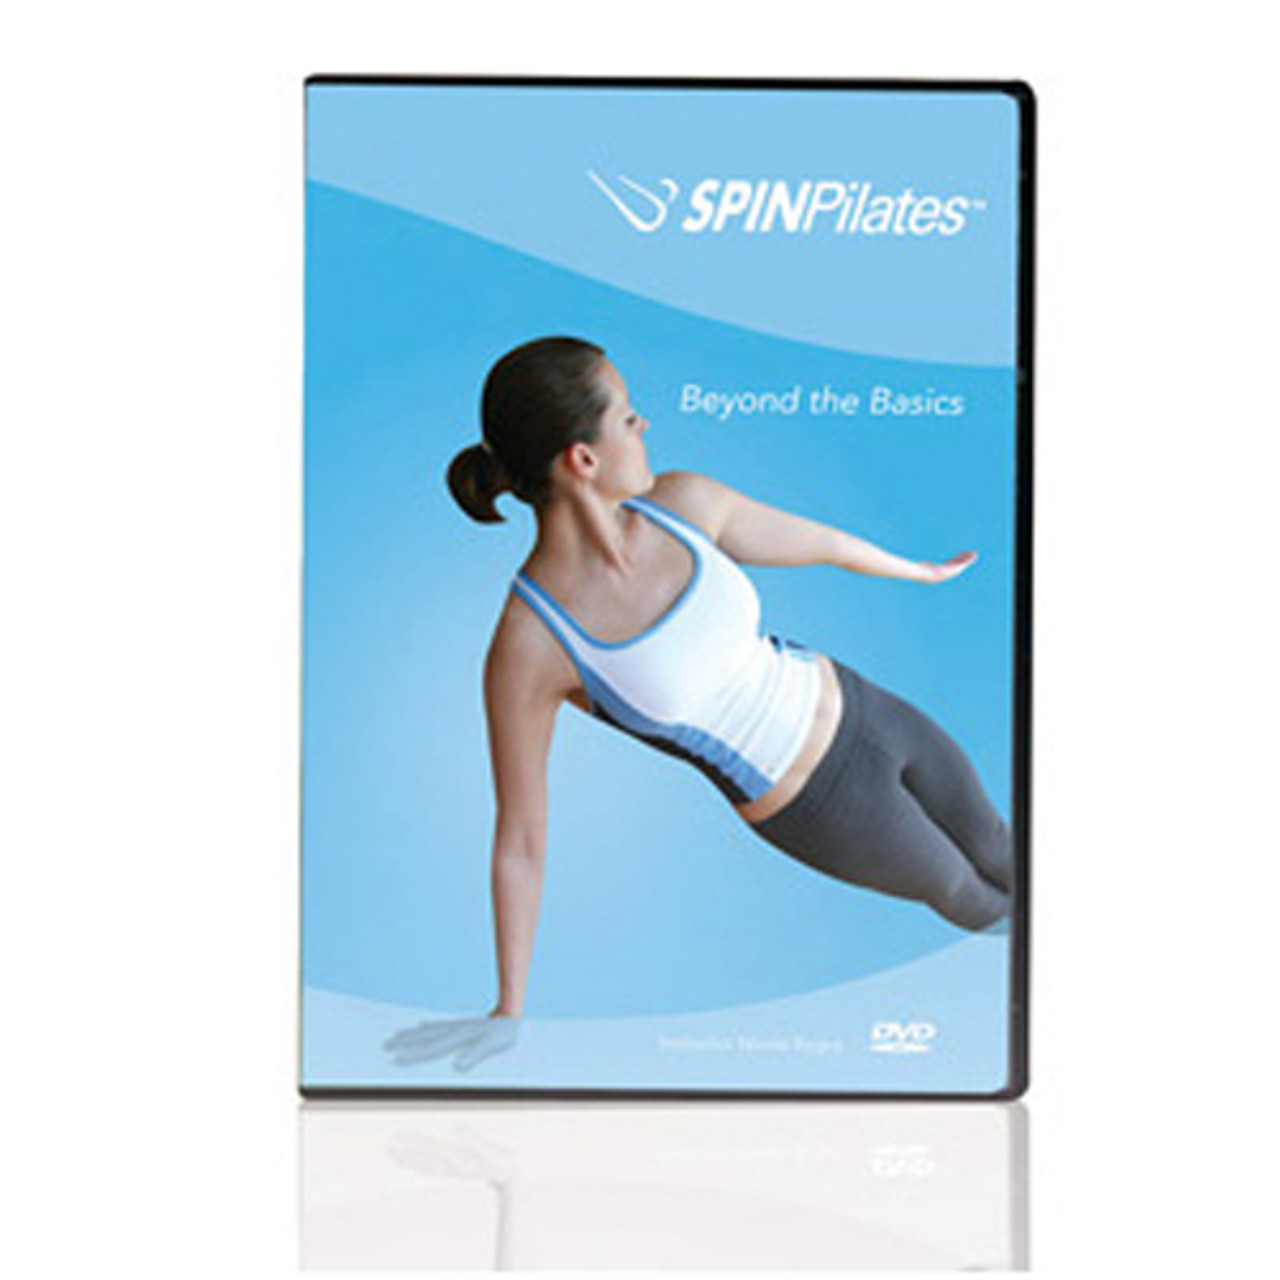 Pilates Basics (DVD)